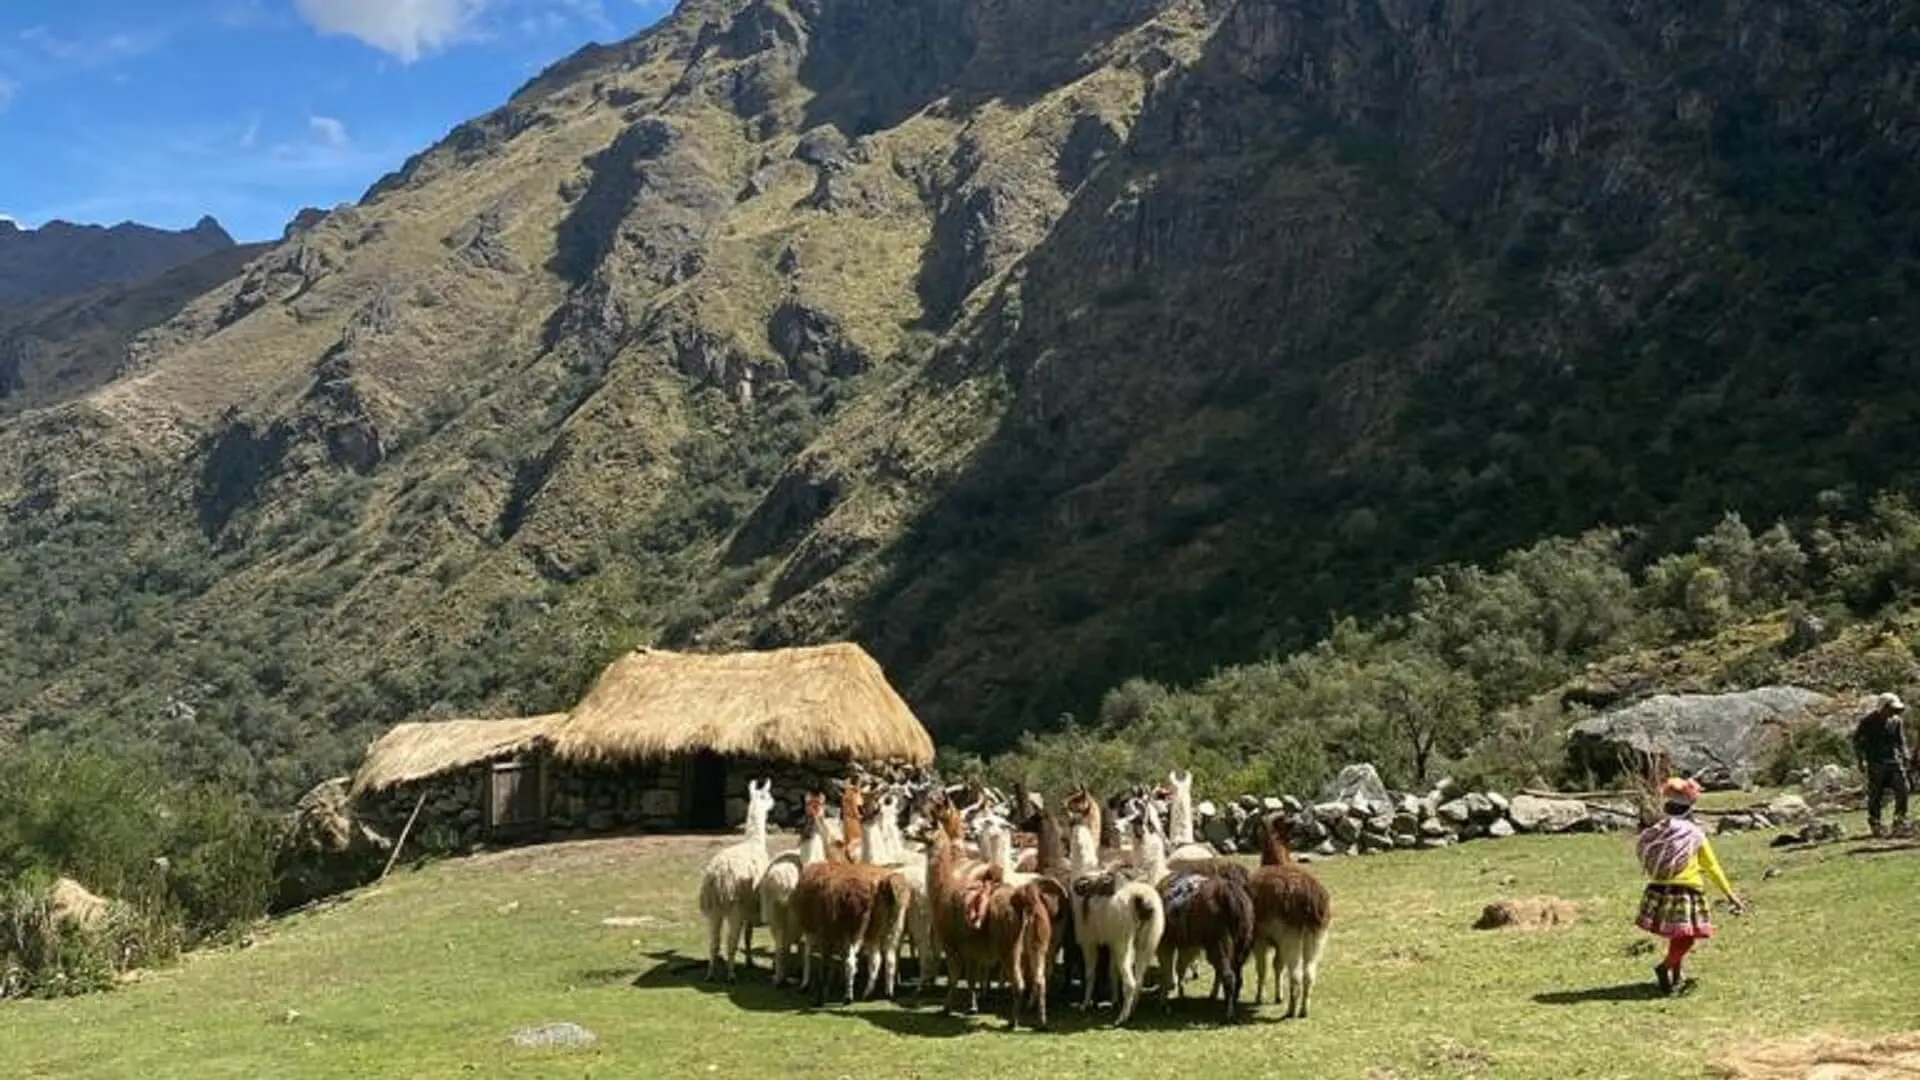 Llamas in mountains